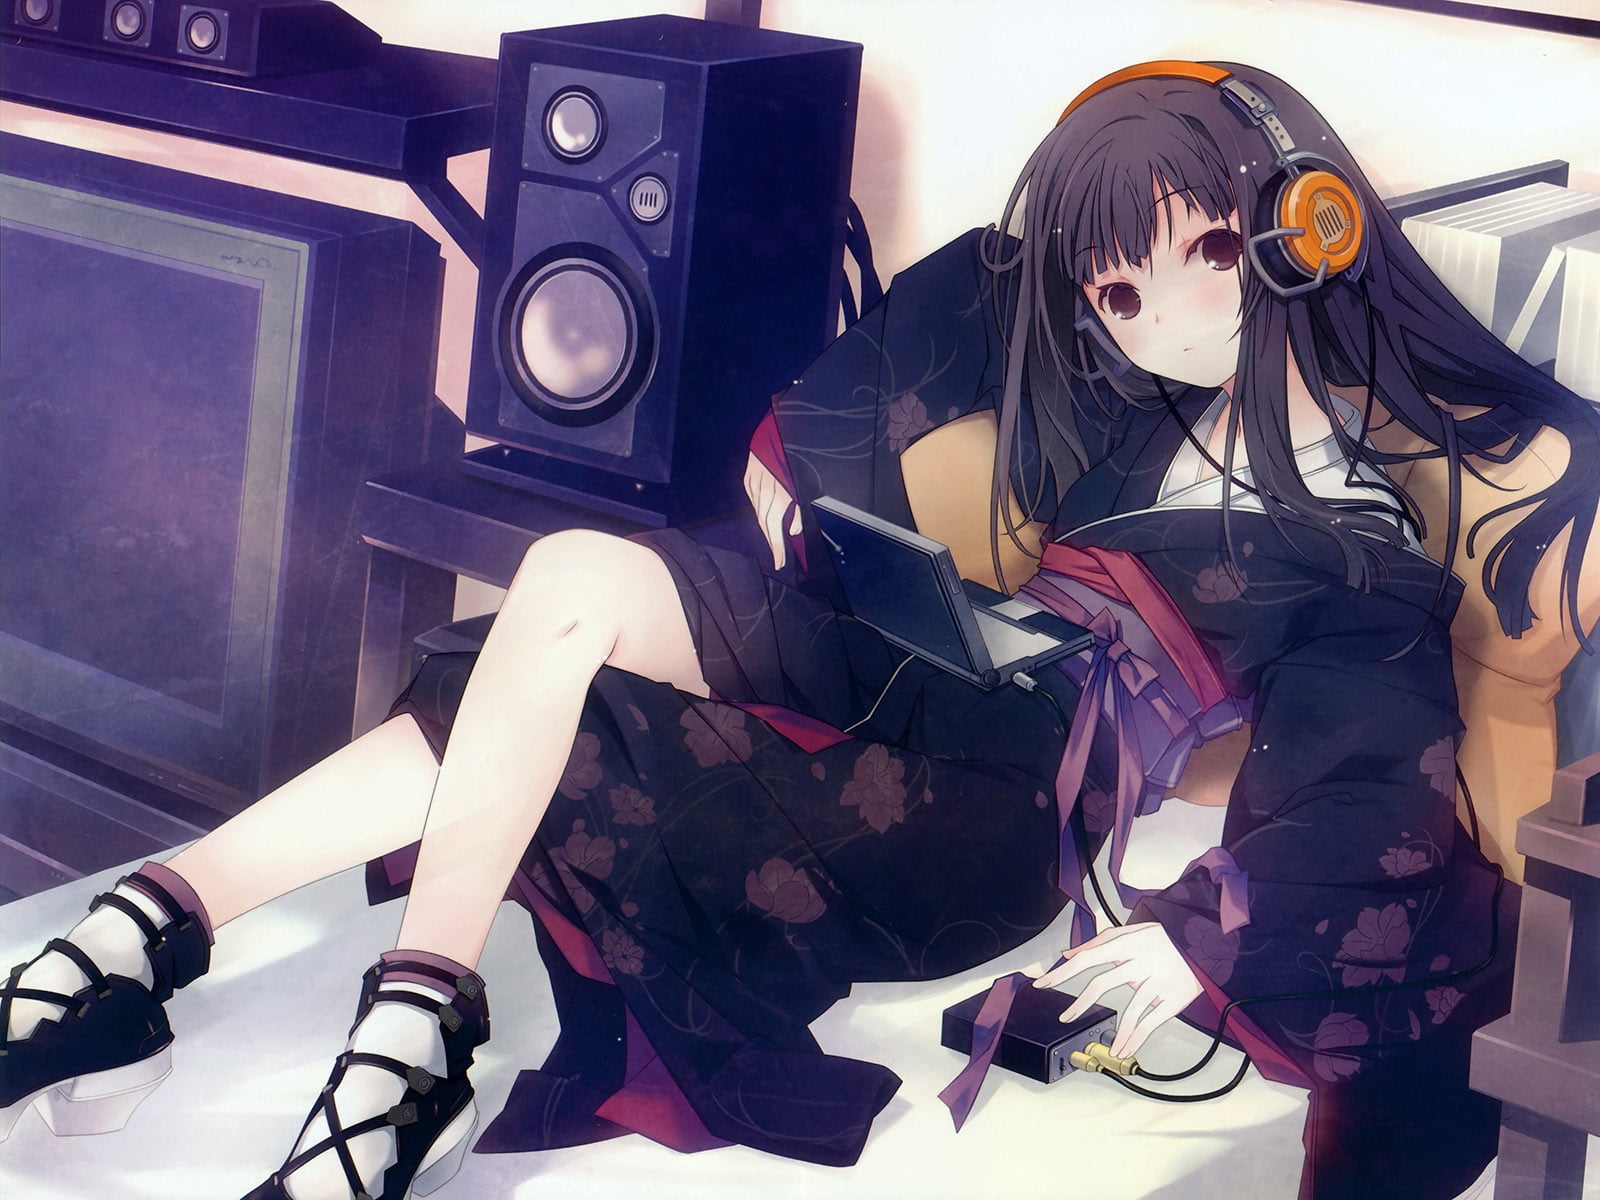 anime girl with purple hair and headphones